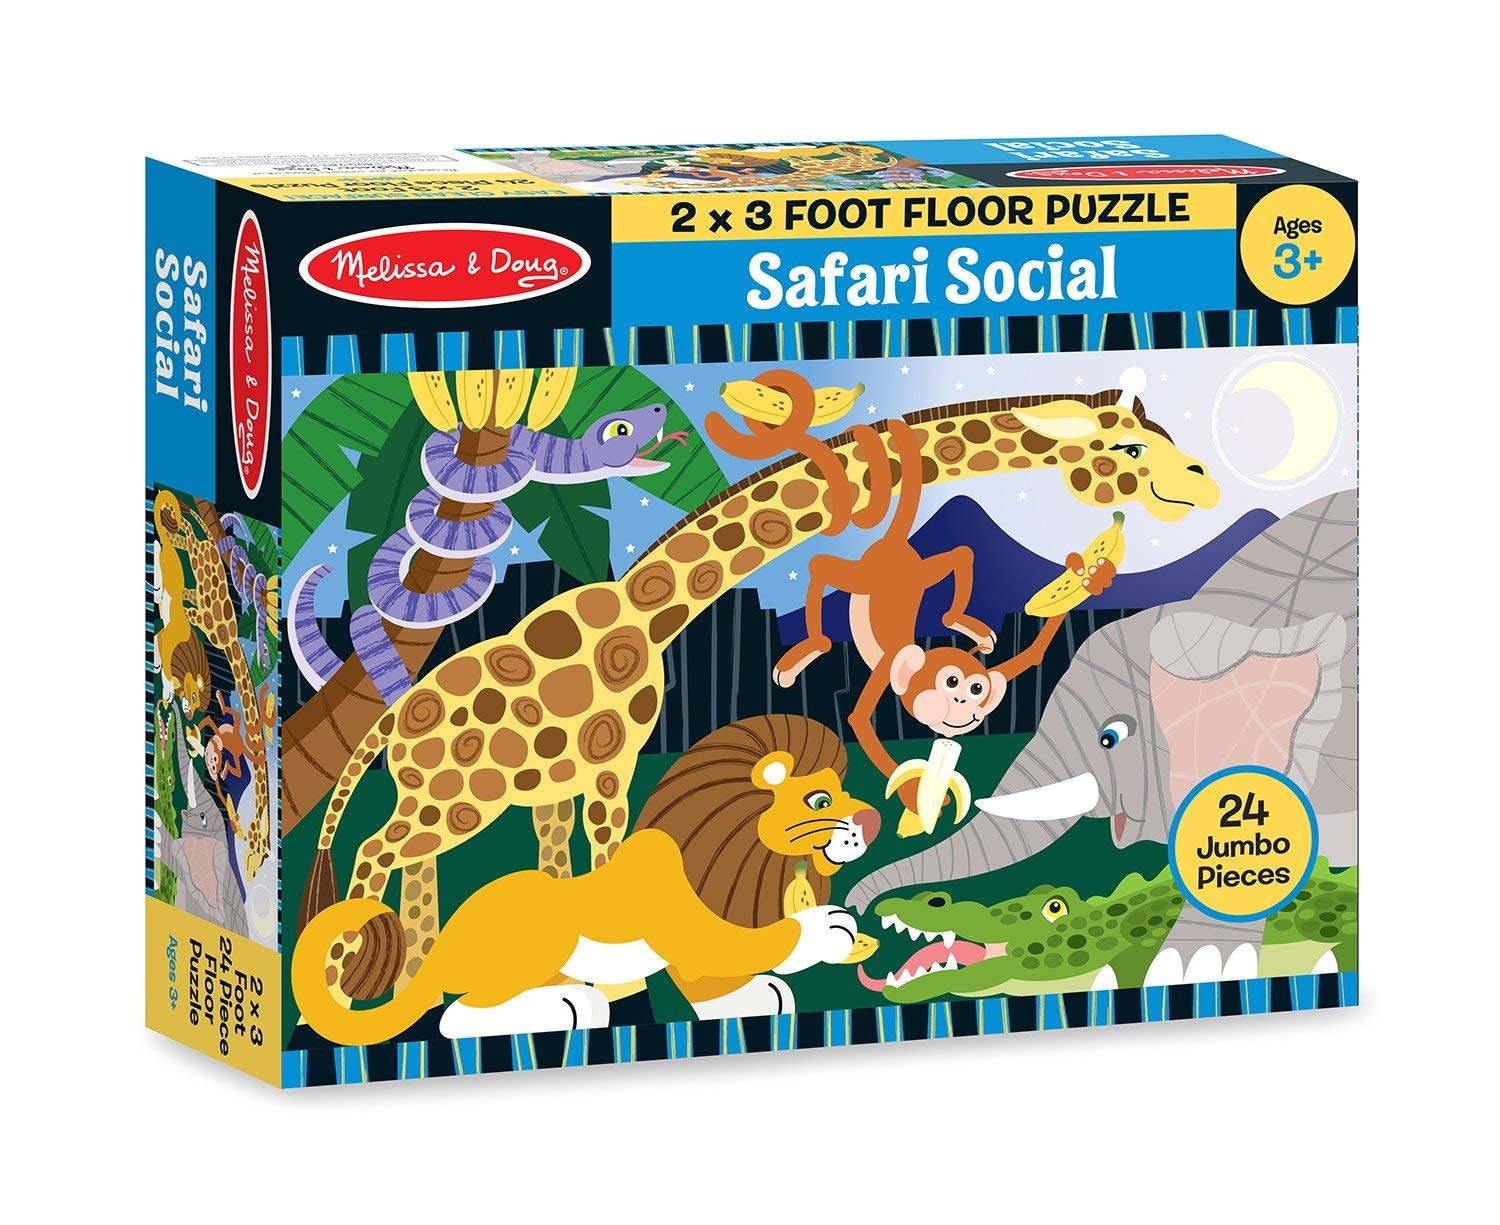 amazon com melissa doug safari social jumbo jigsaw floor puzzle 24 pcs 2 x 3 feet melissa doug 24pc 4423 toys games